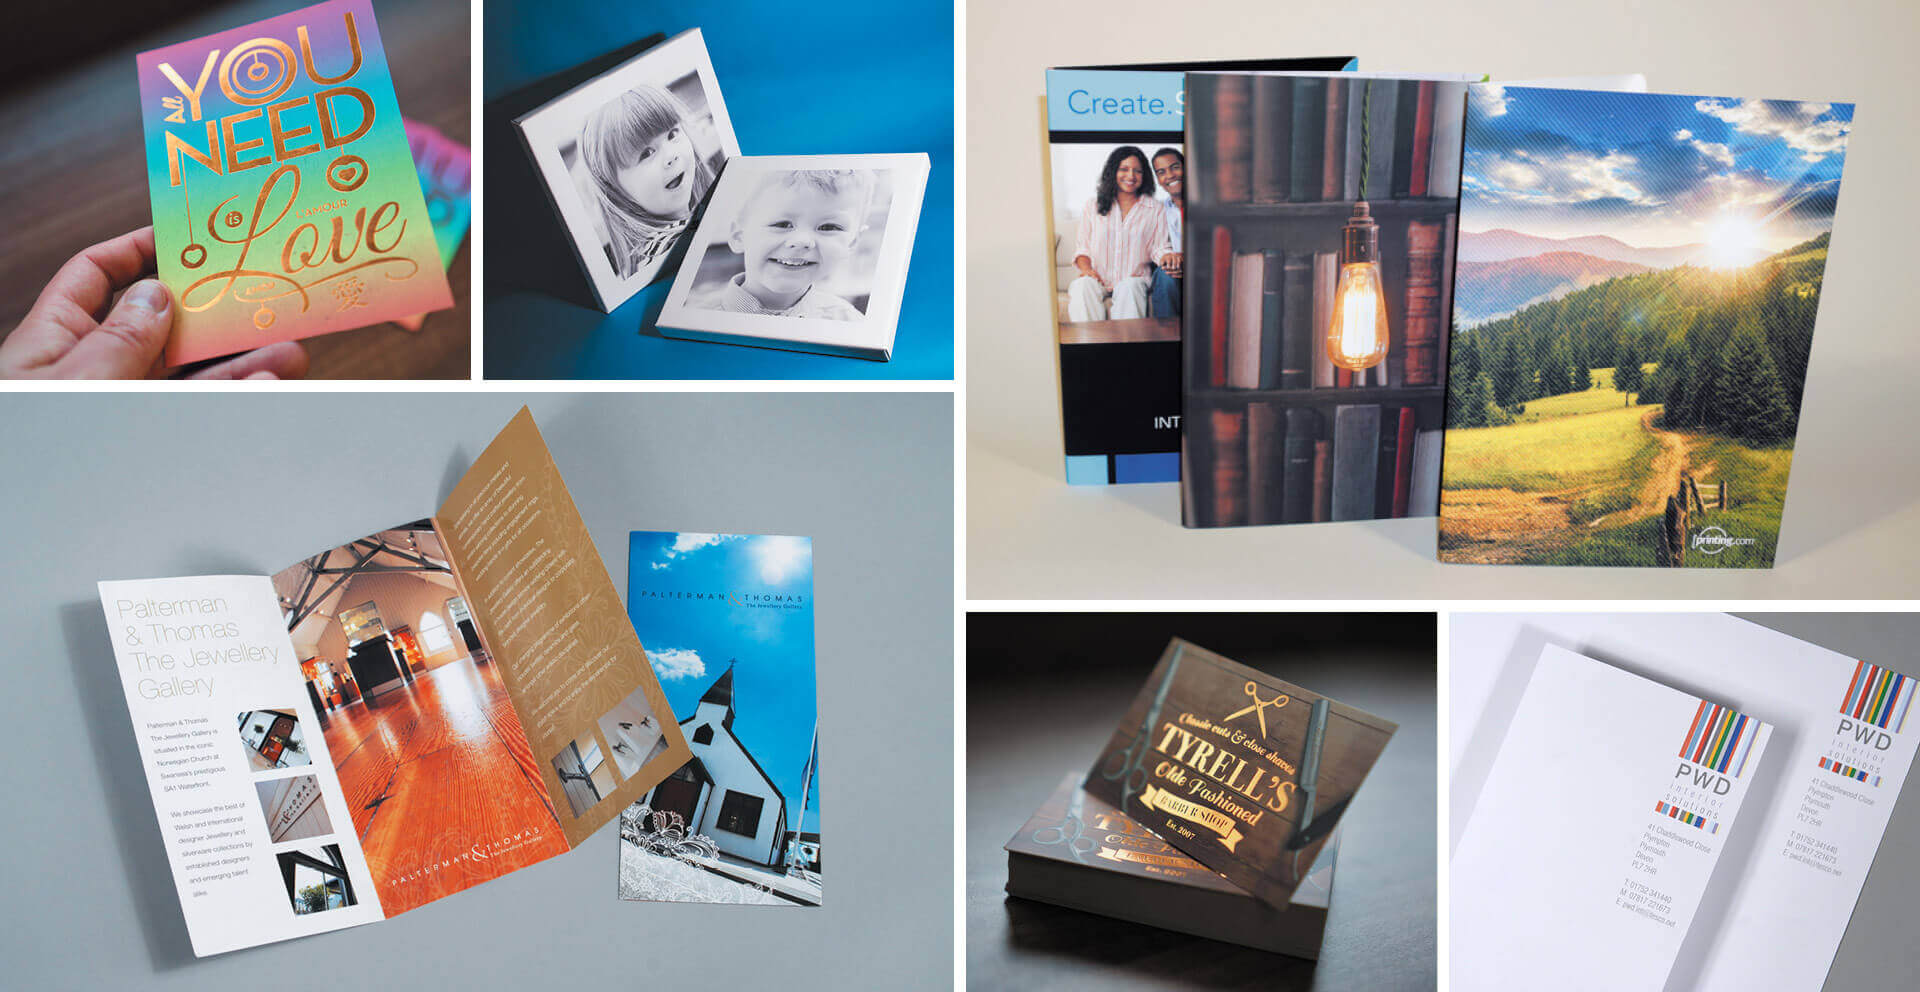 Nettl Design Studio examples of printed materials